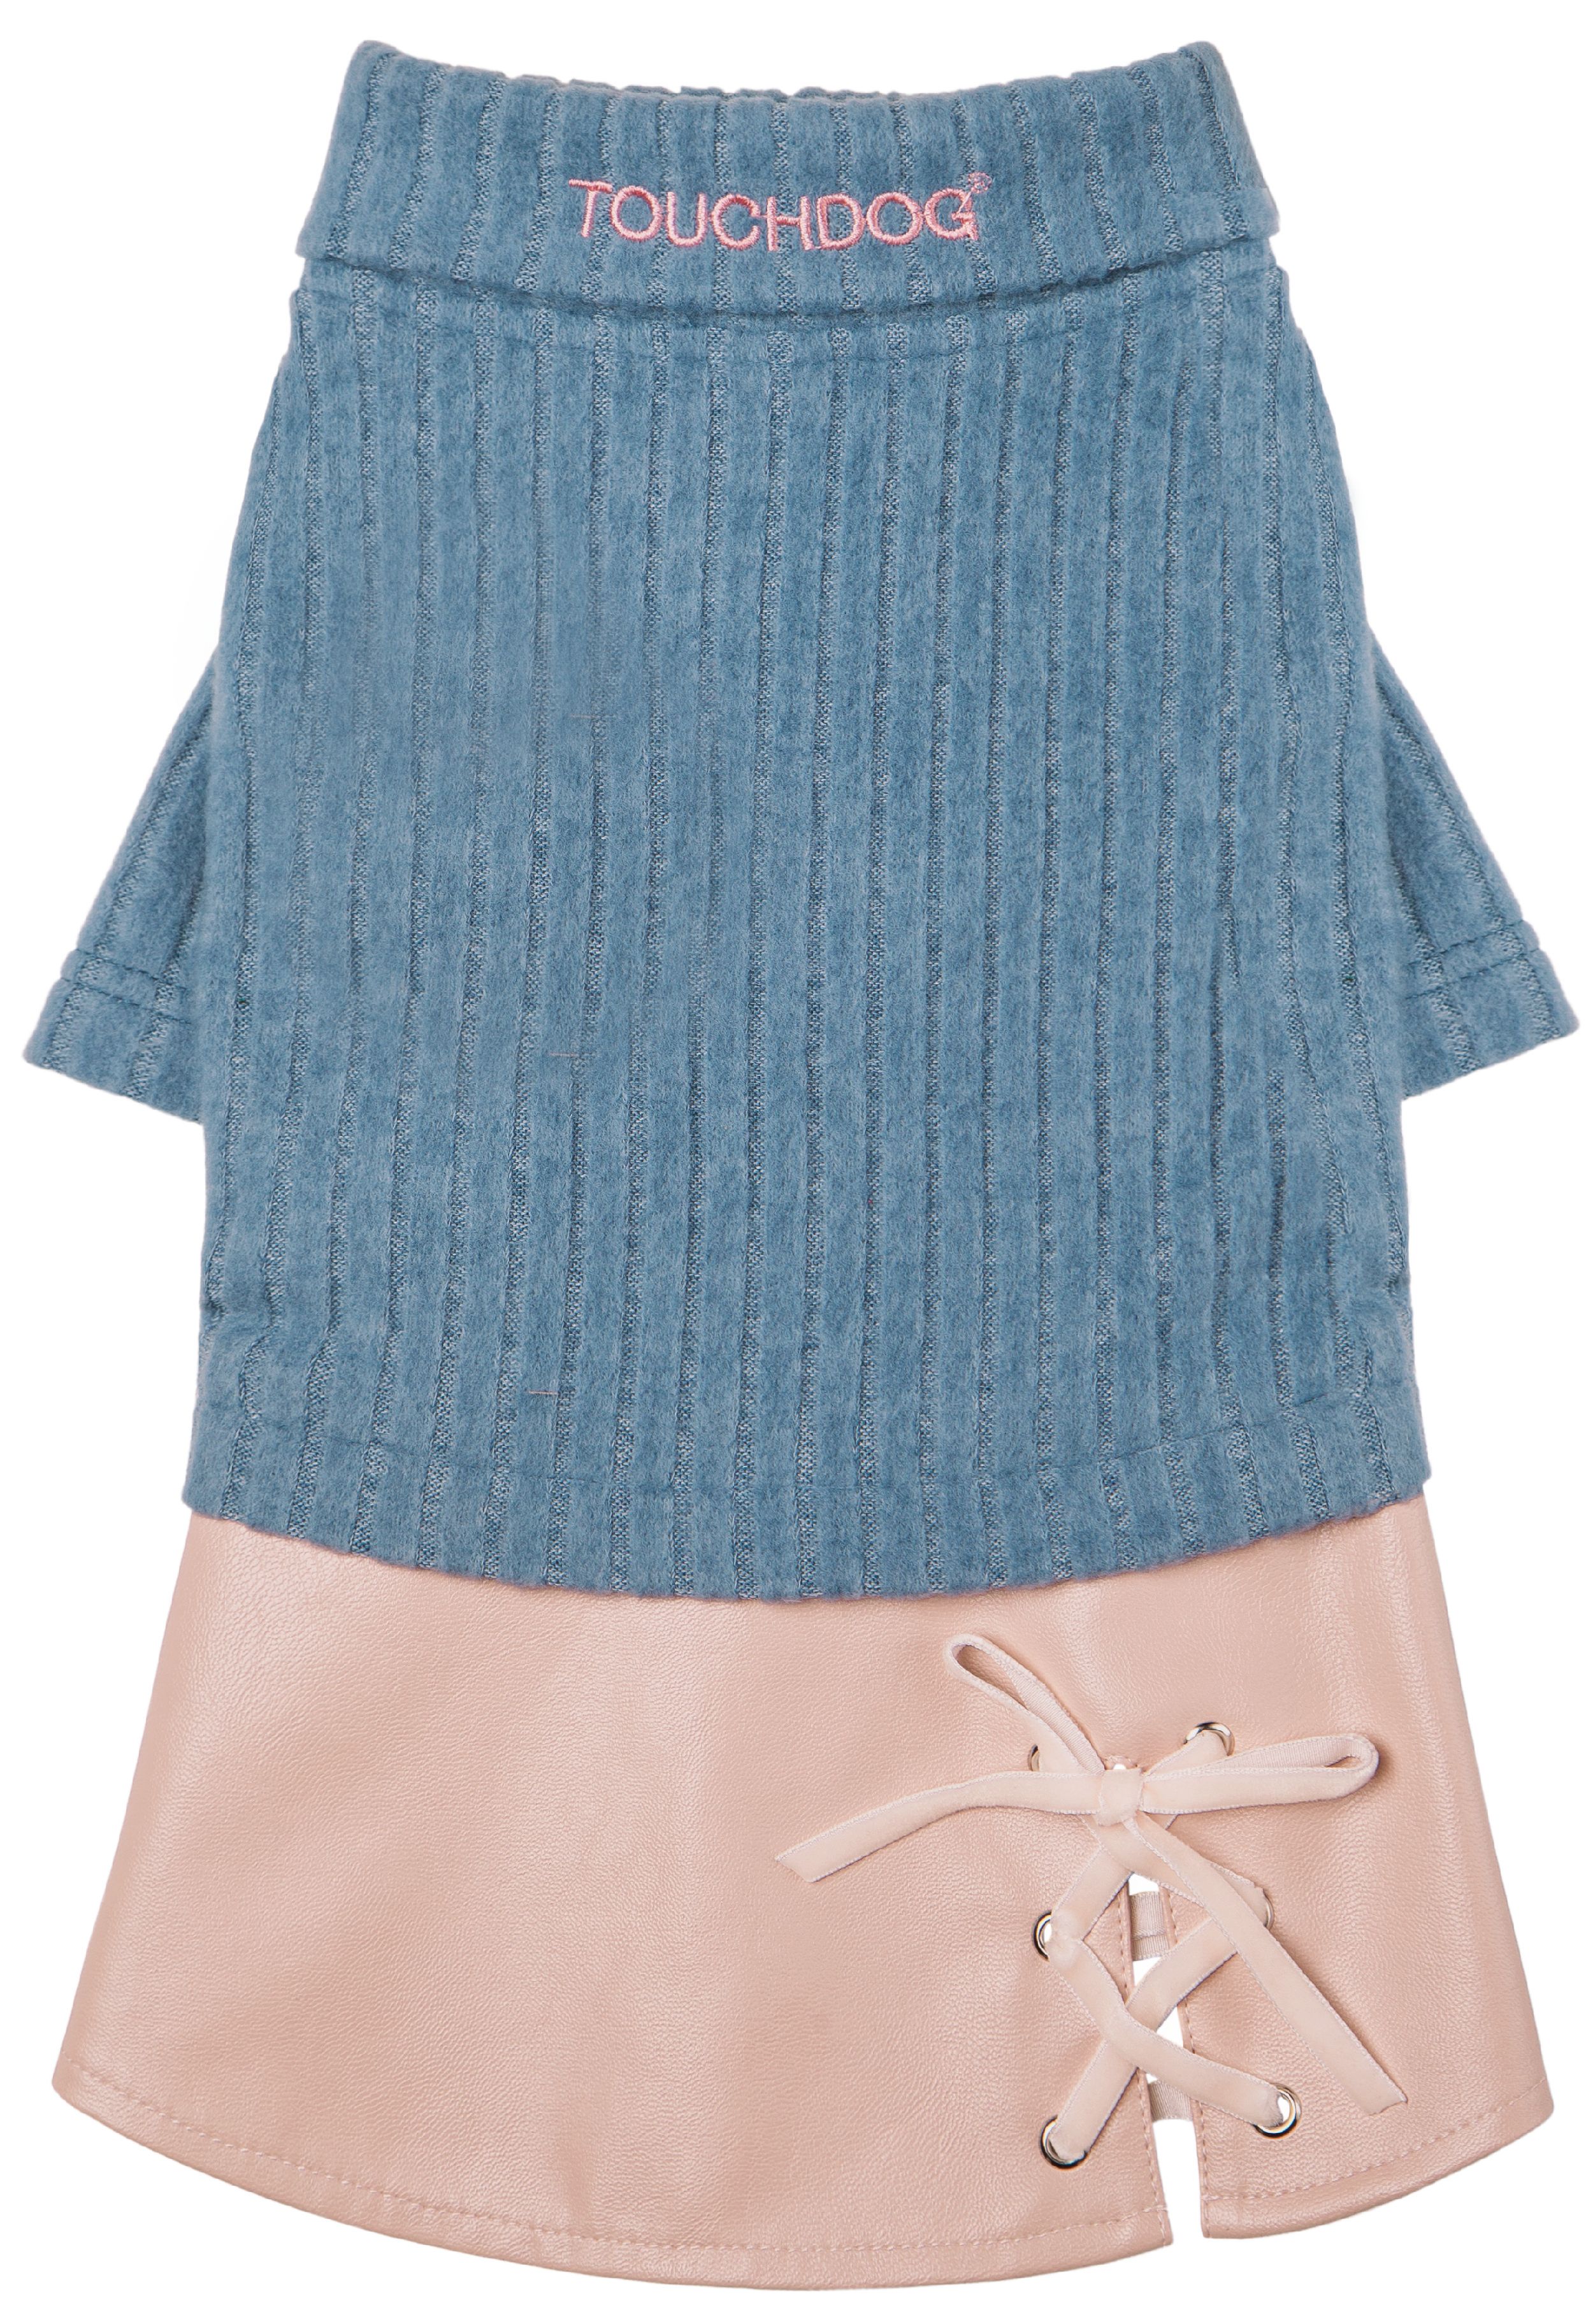 Touchdog ® 'Modress' Fashion Designer Dog Sweater and Dress Blue Small